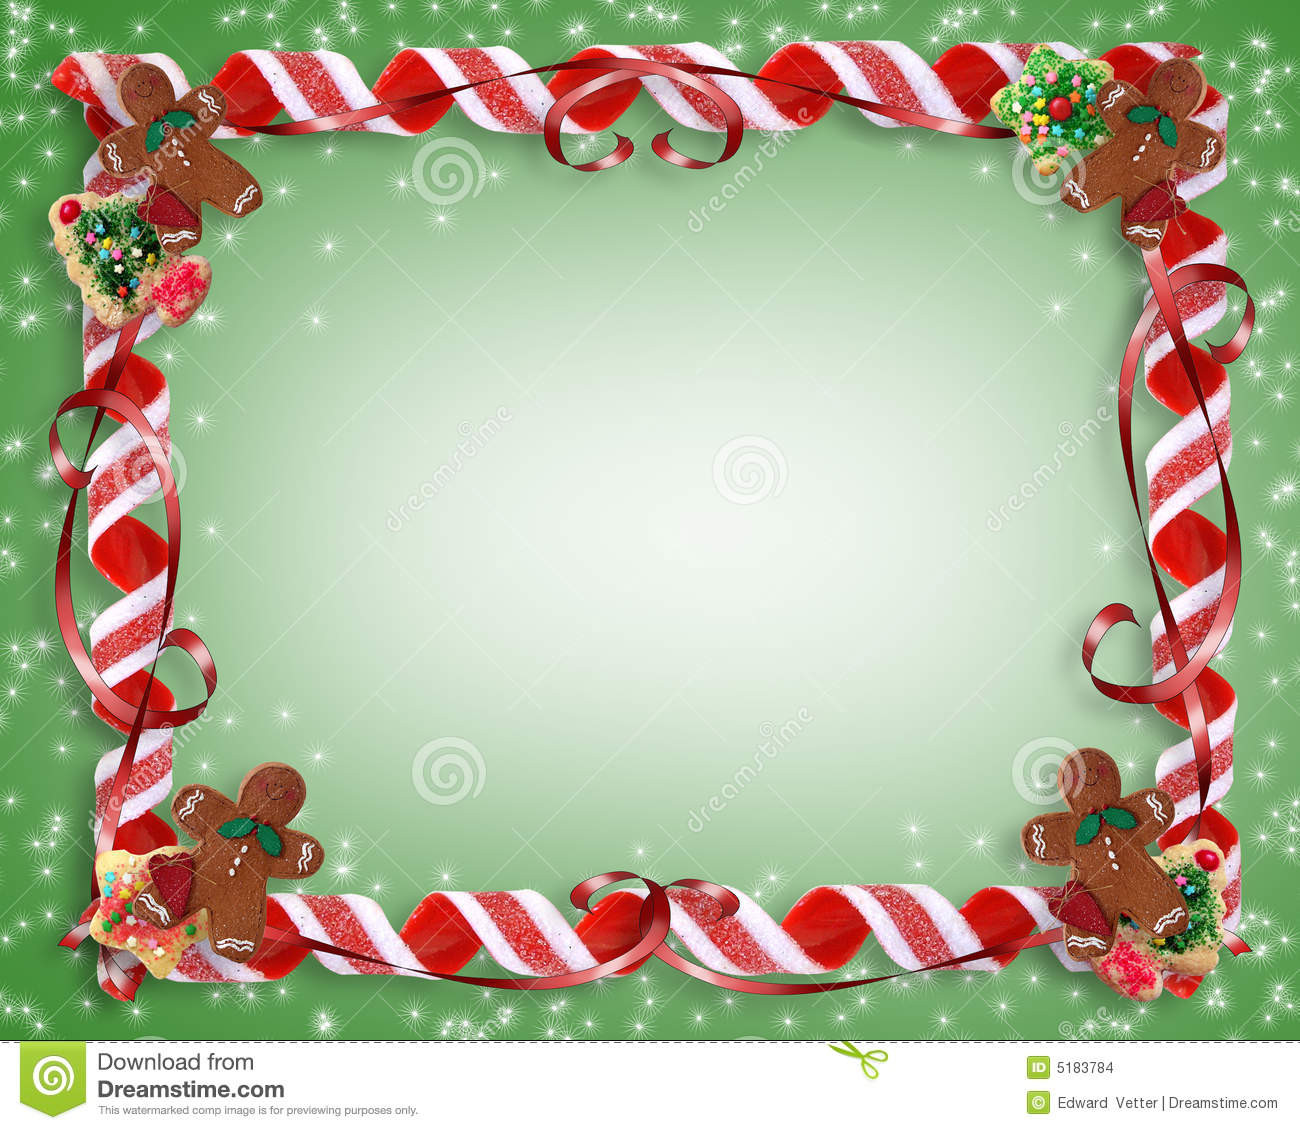 Christmas Cookies Borders
 Christmas Cookies And Candy Frame Stock Illustration